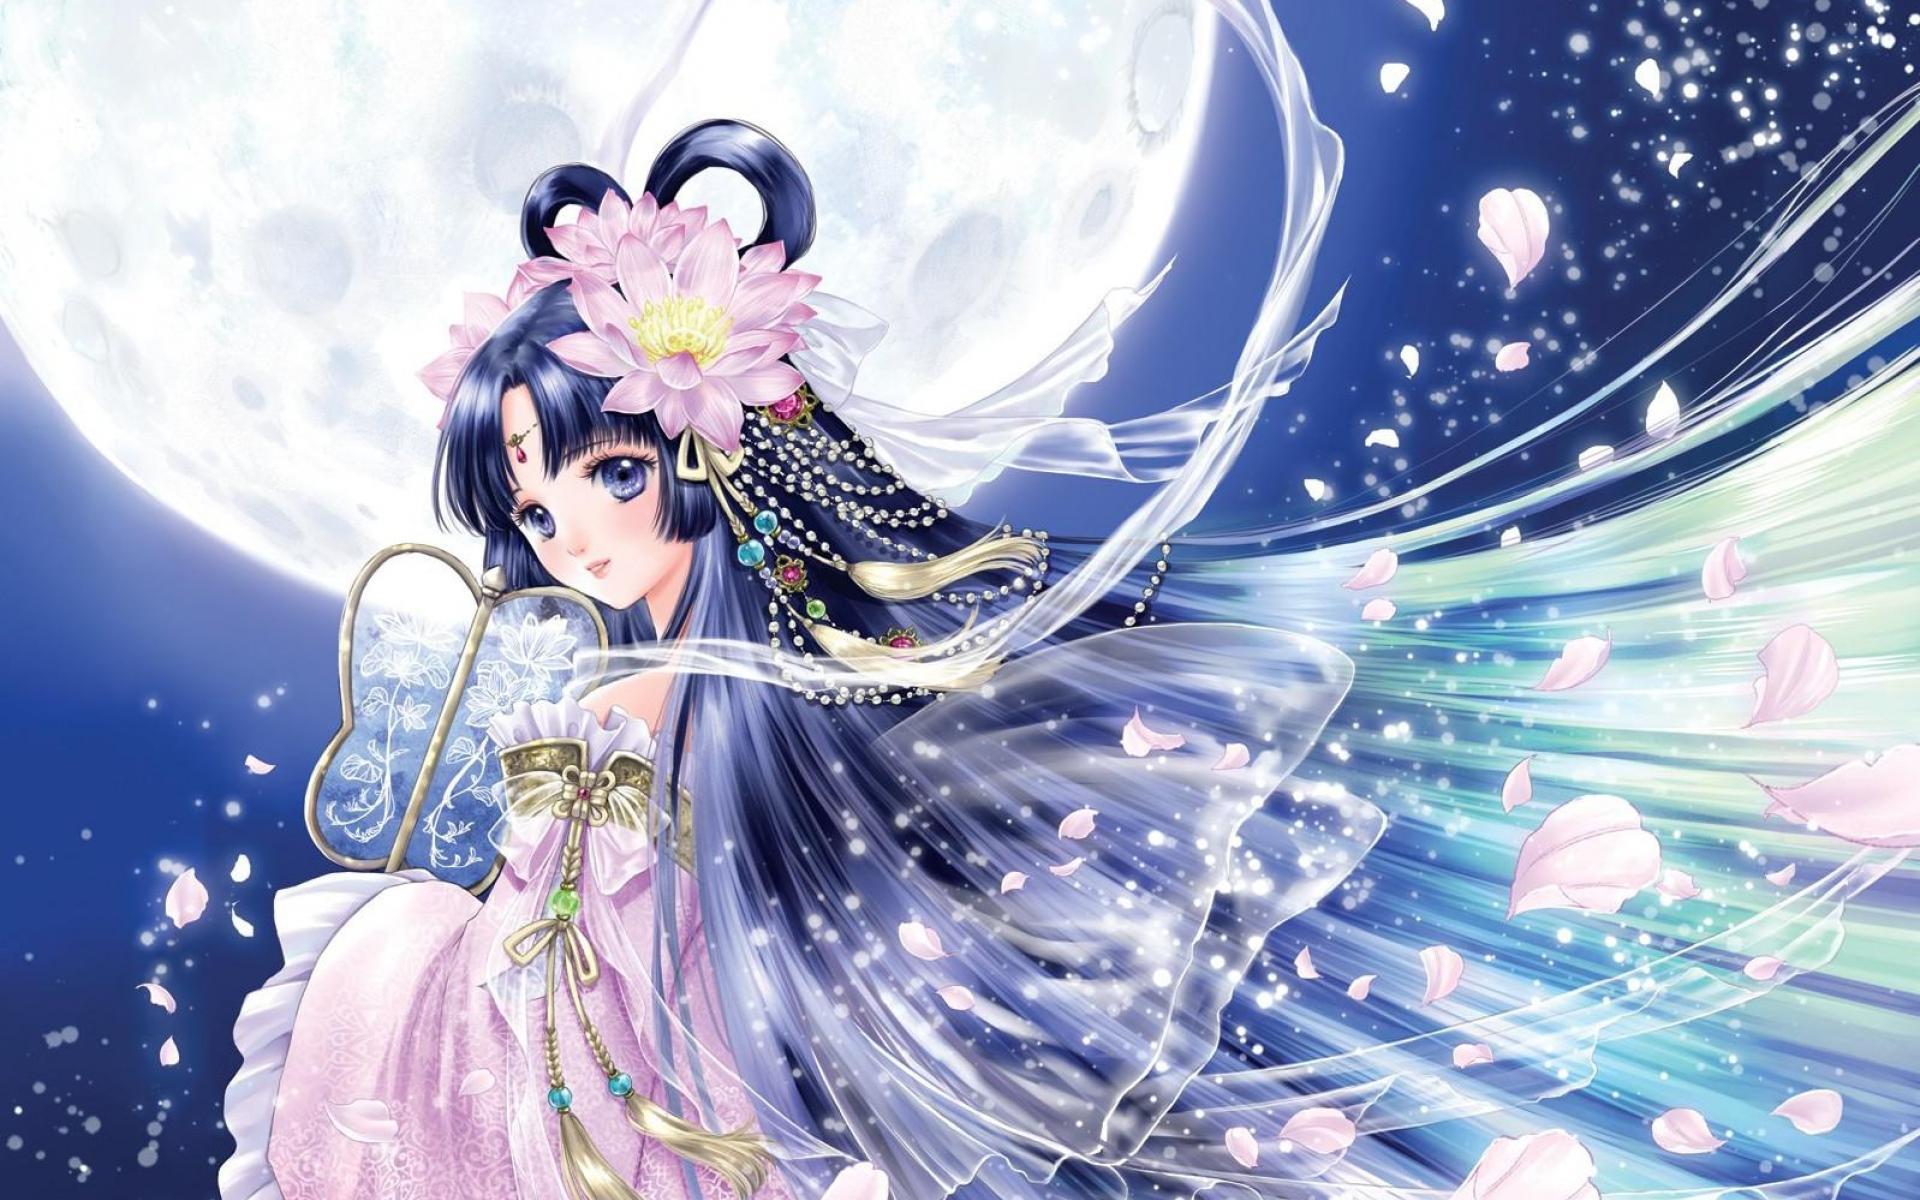 Anime Princess Wallpaper Hd Bestpicture1 Org